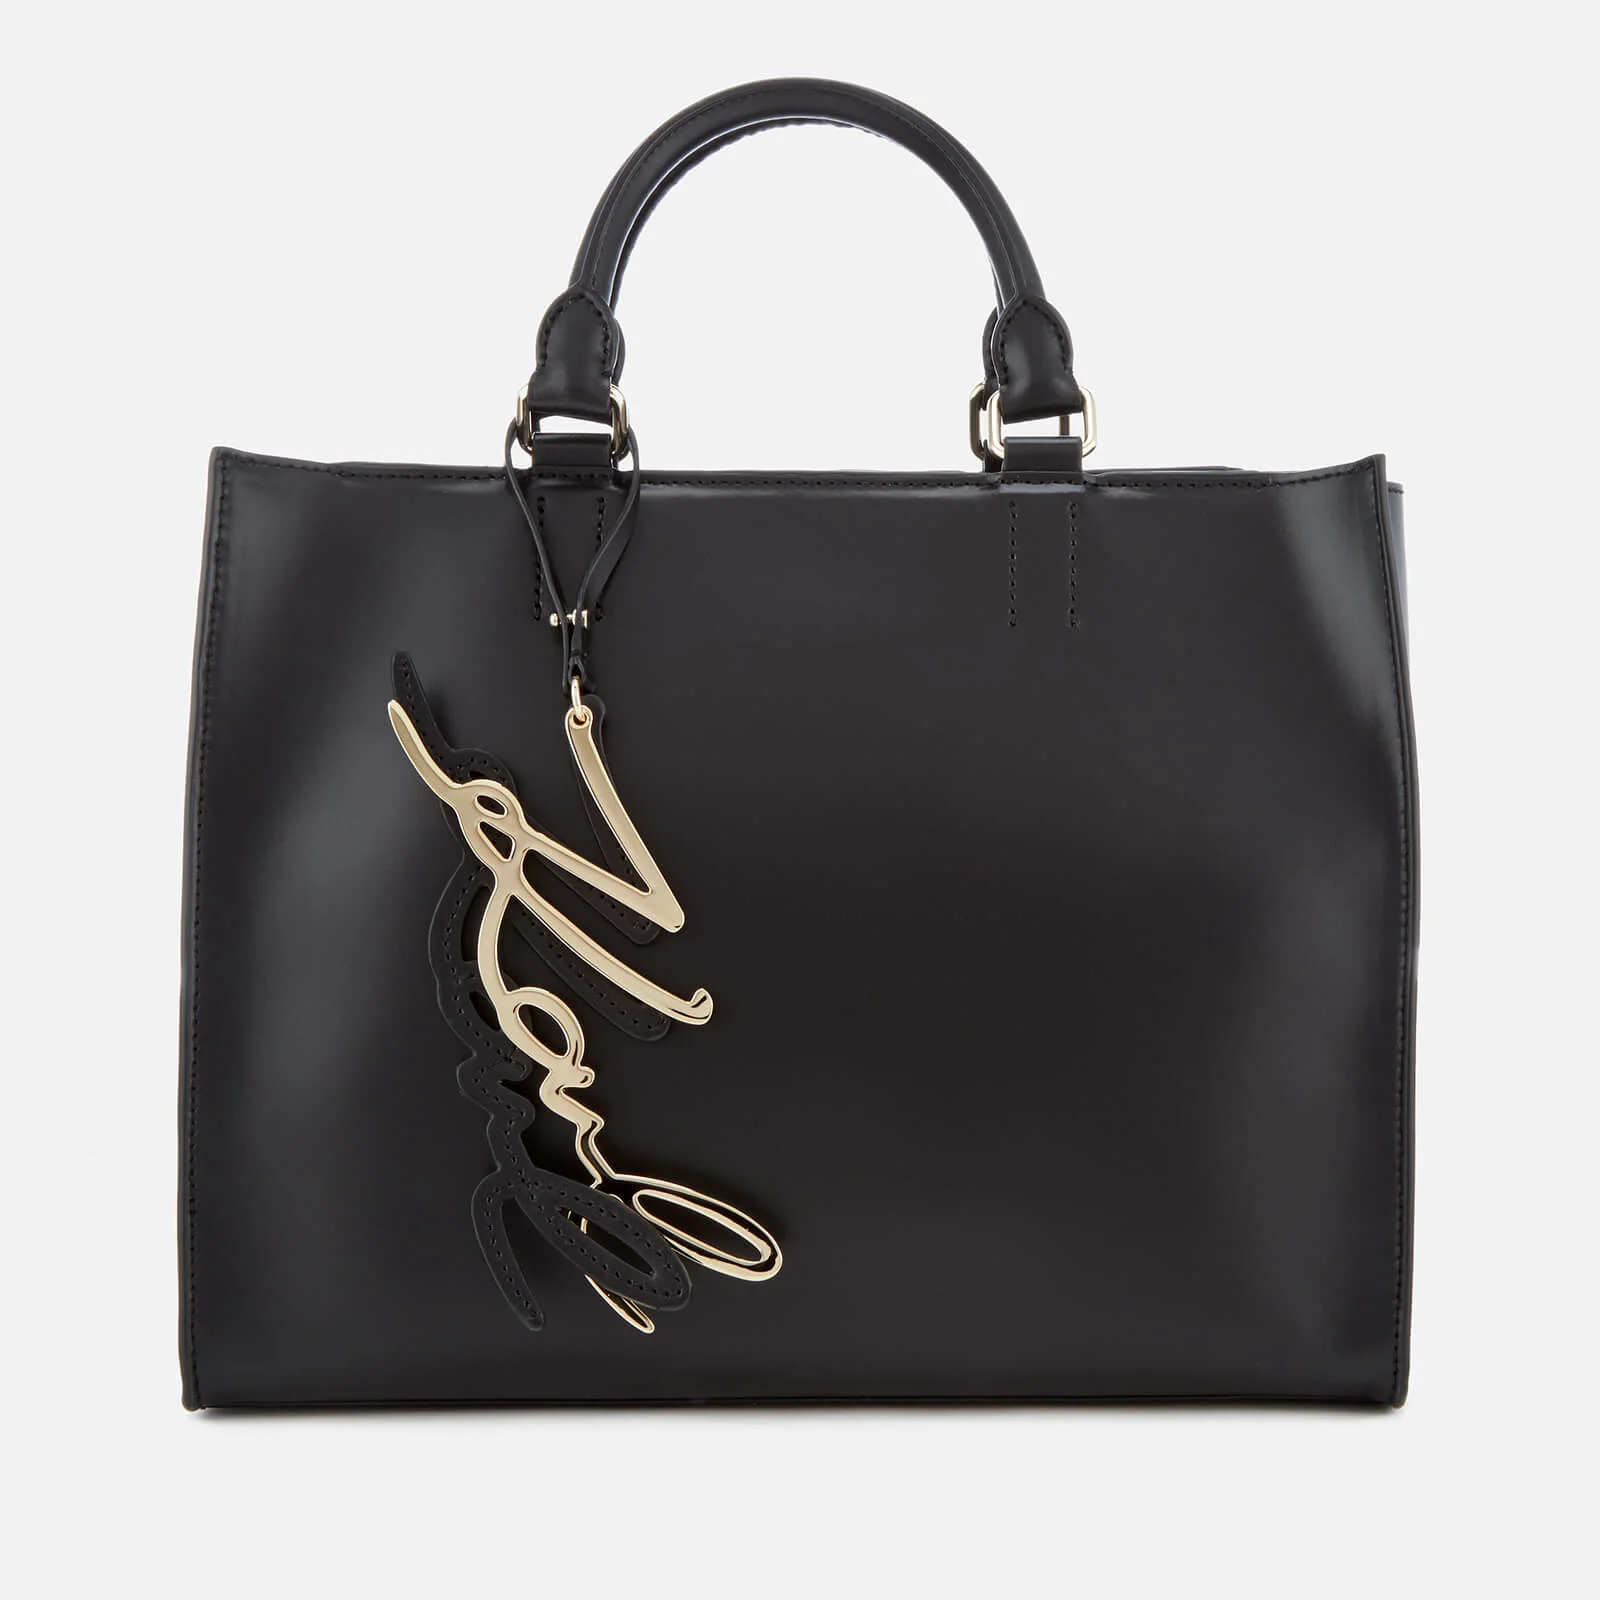 Karl Lagerfeld Women's K/Metal Signature Shopper Bag - Black Image 1